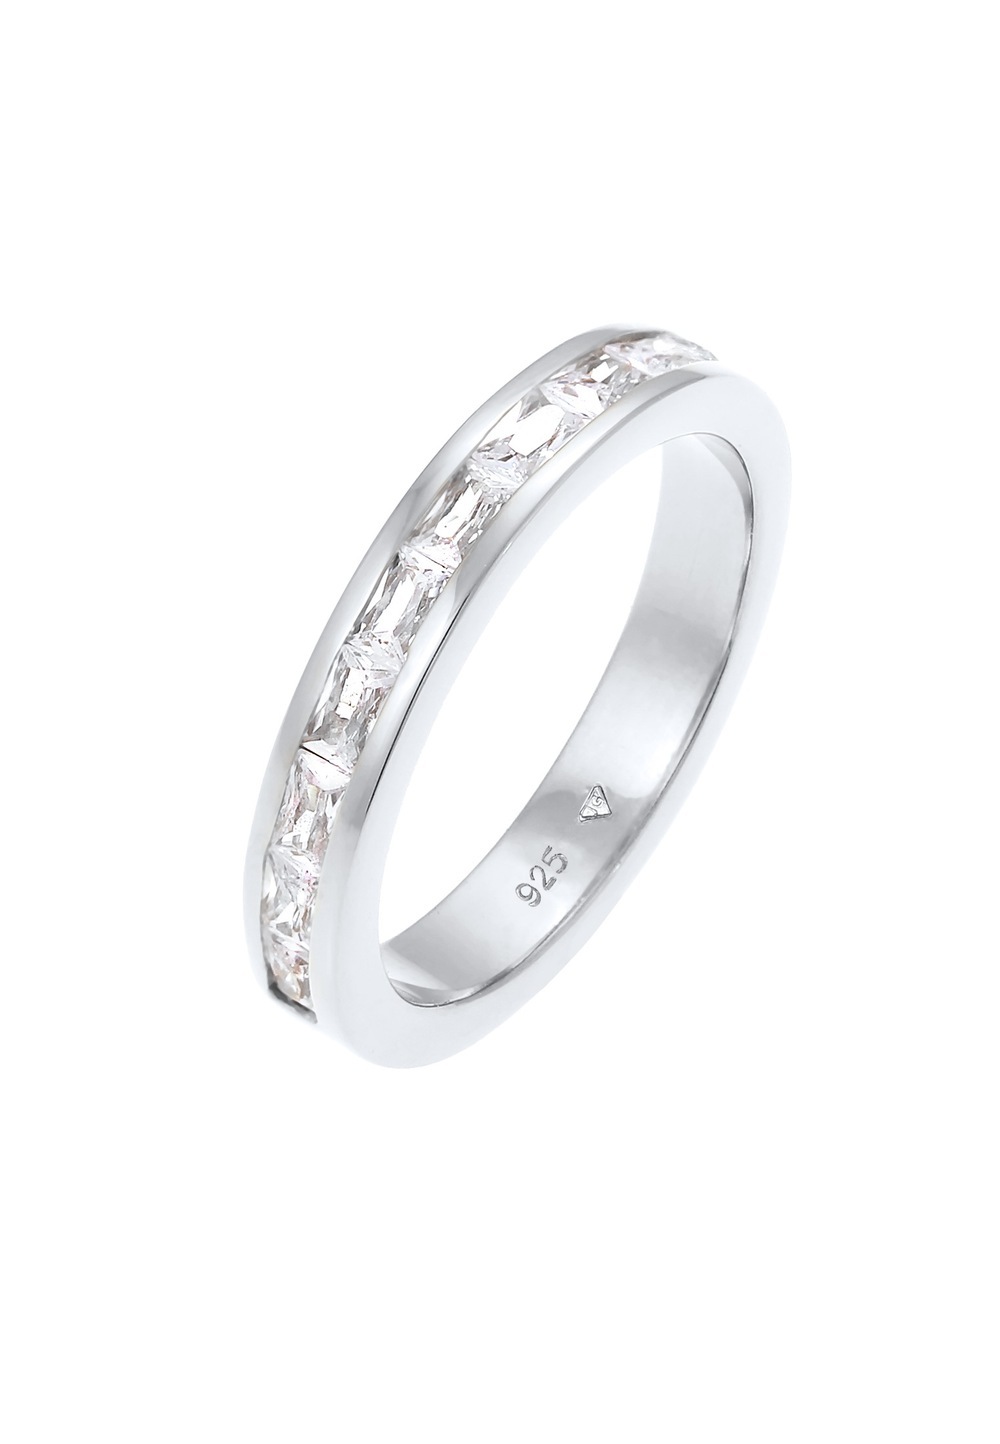 Elli Elli Elli Ring Dames Band Ring Baguette geslepen Elegant met Zirkonia kristallen in 925 Sterling Zilver Verguld Ringen